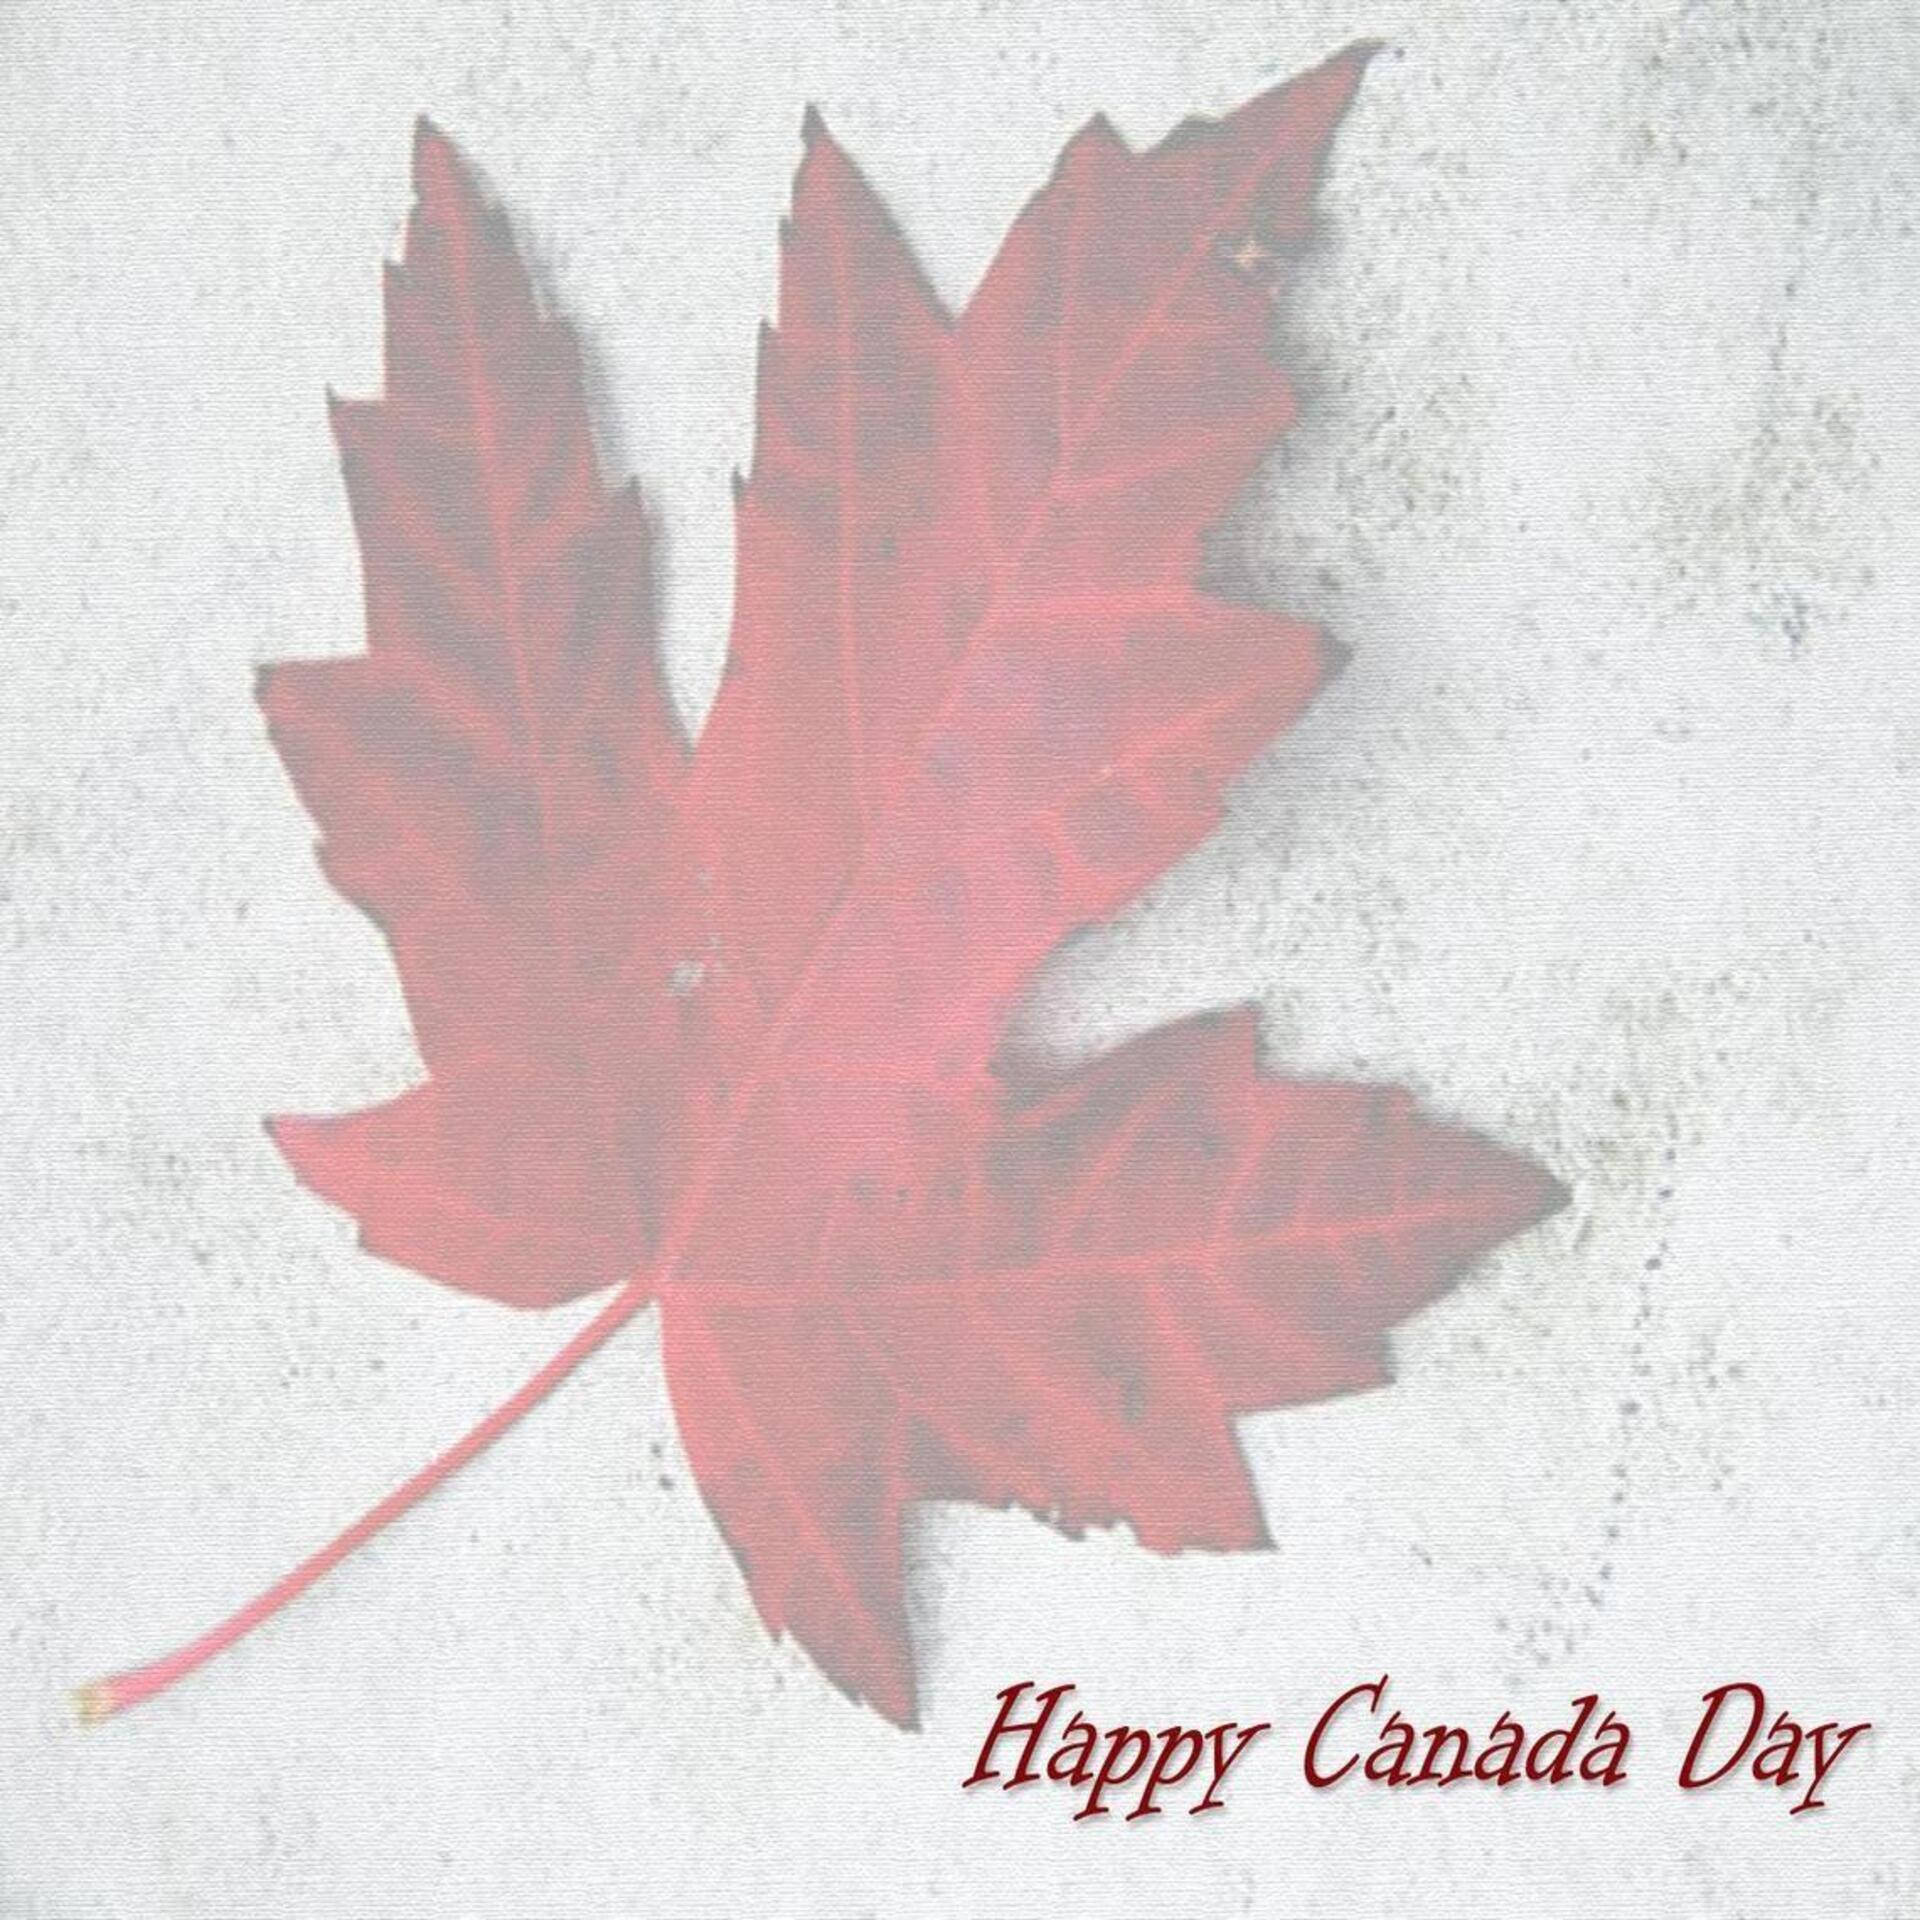 Kanadischernationalfeiertag - Ahornblatt Wallpaper